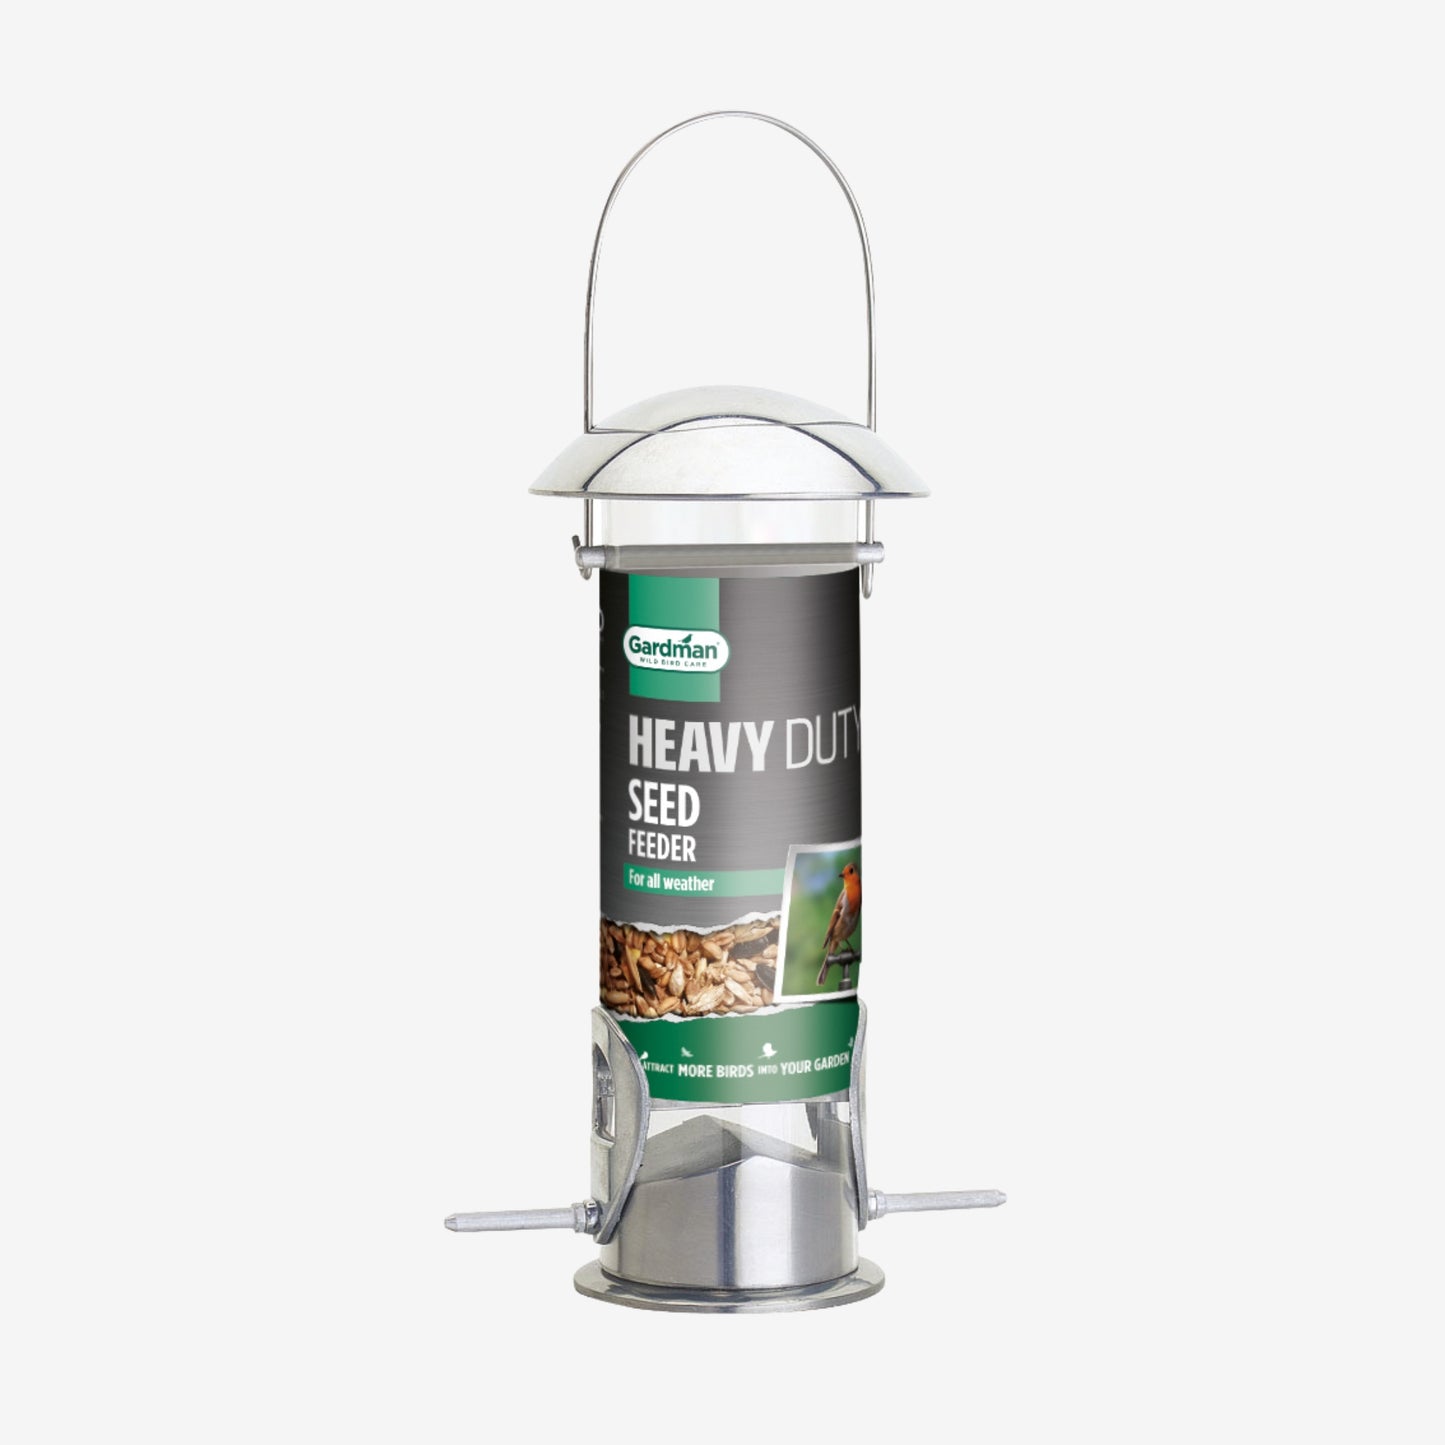 Gardman Heavy Duty Seed Feeder in packaging